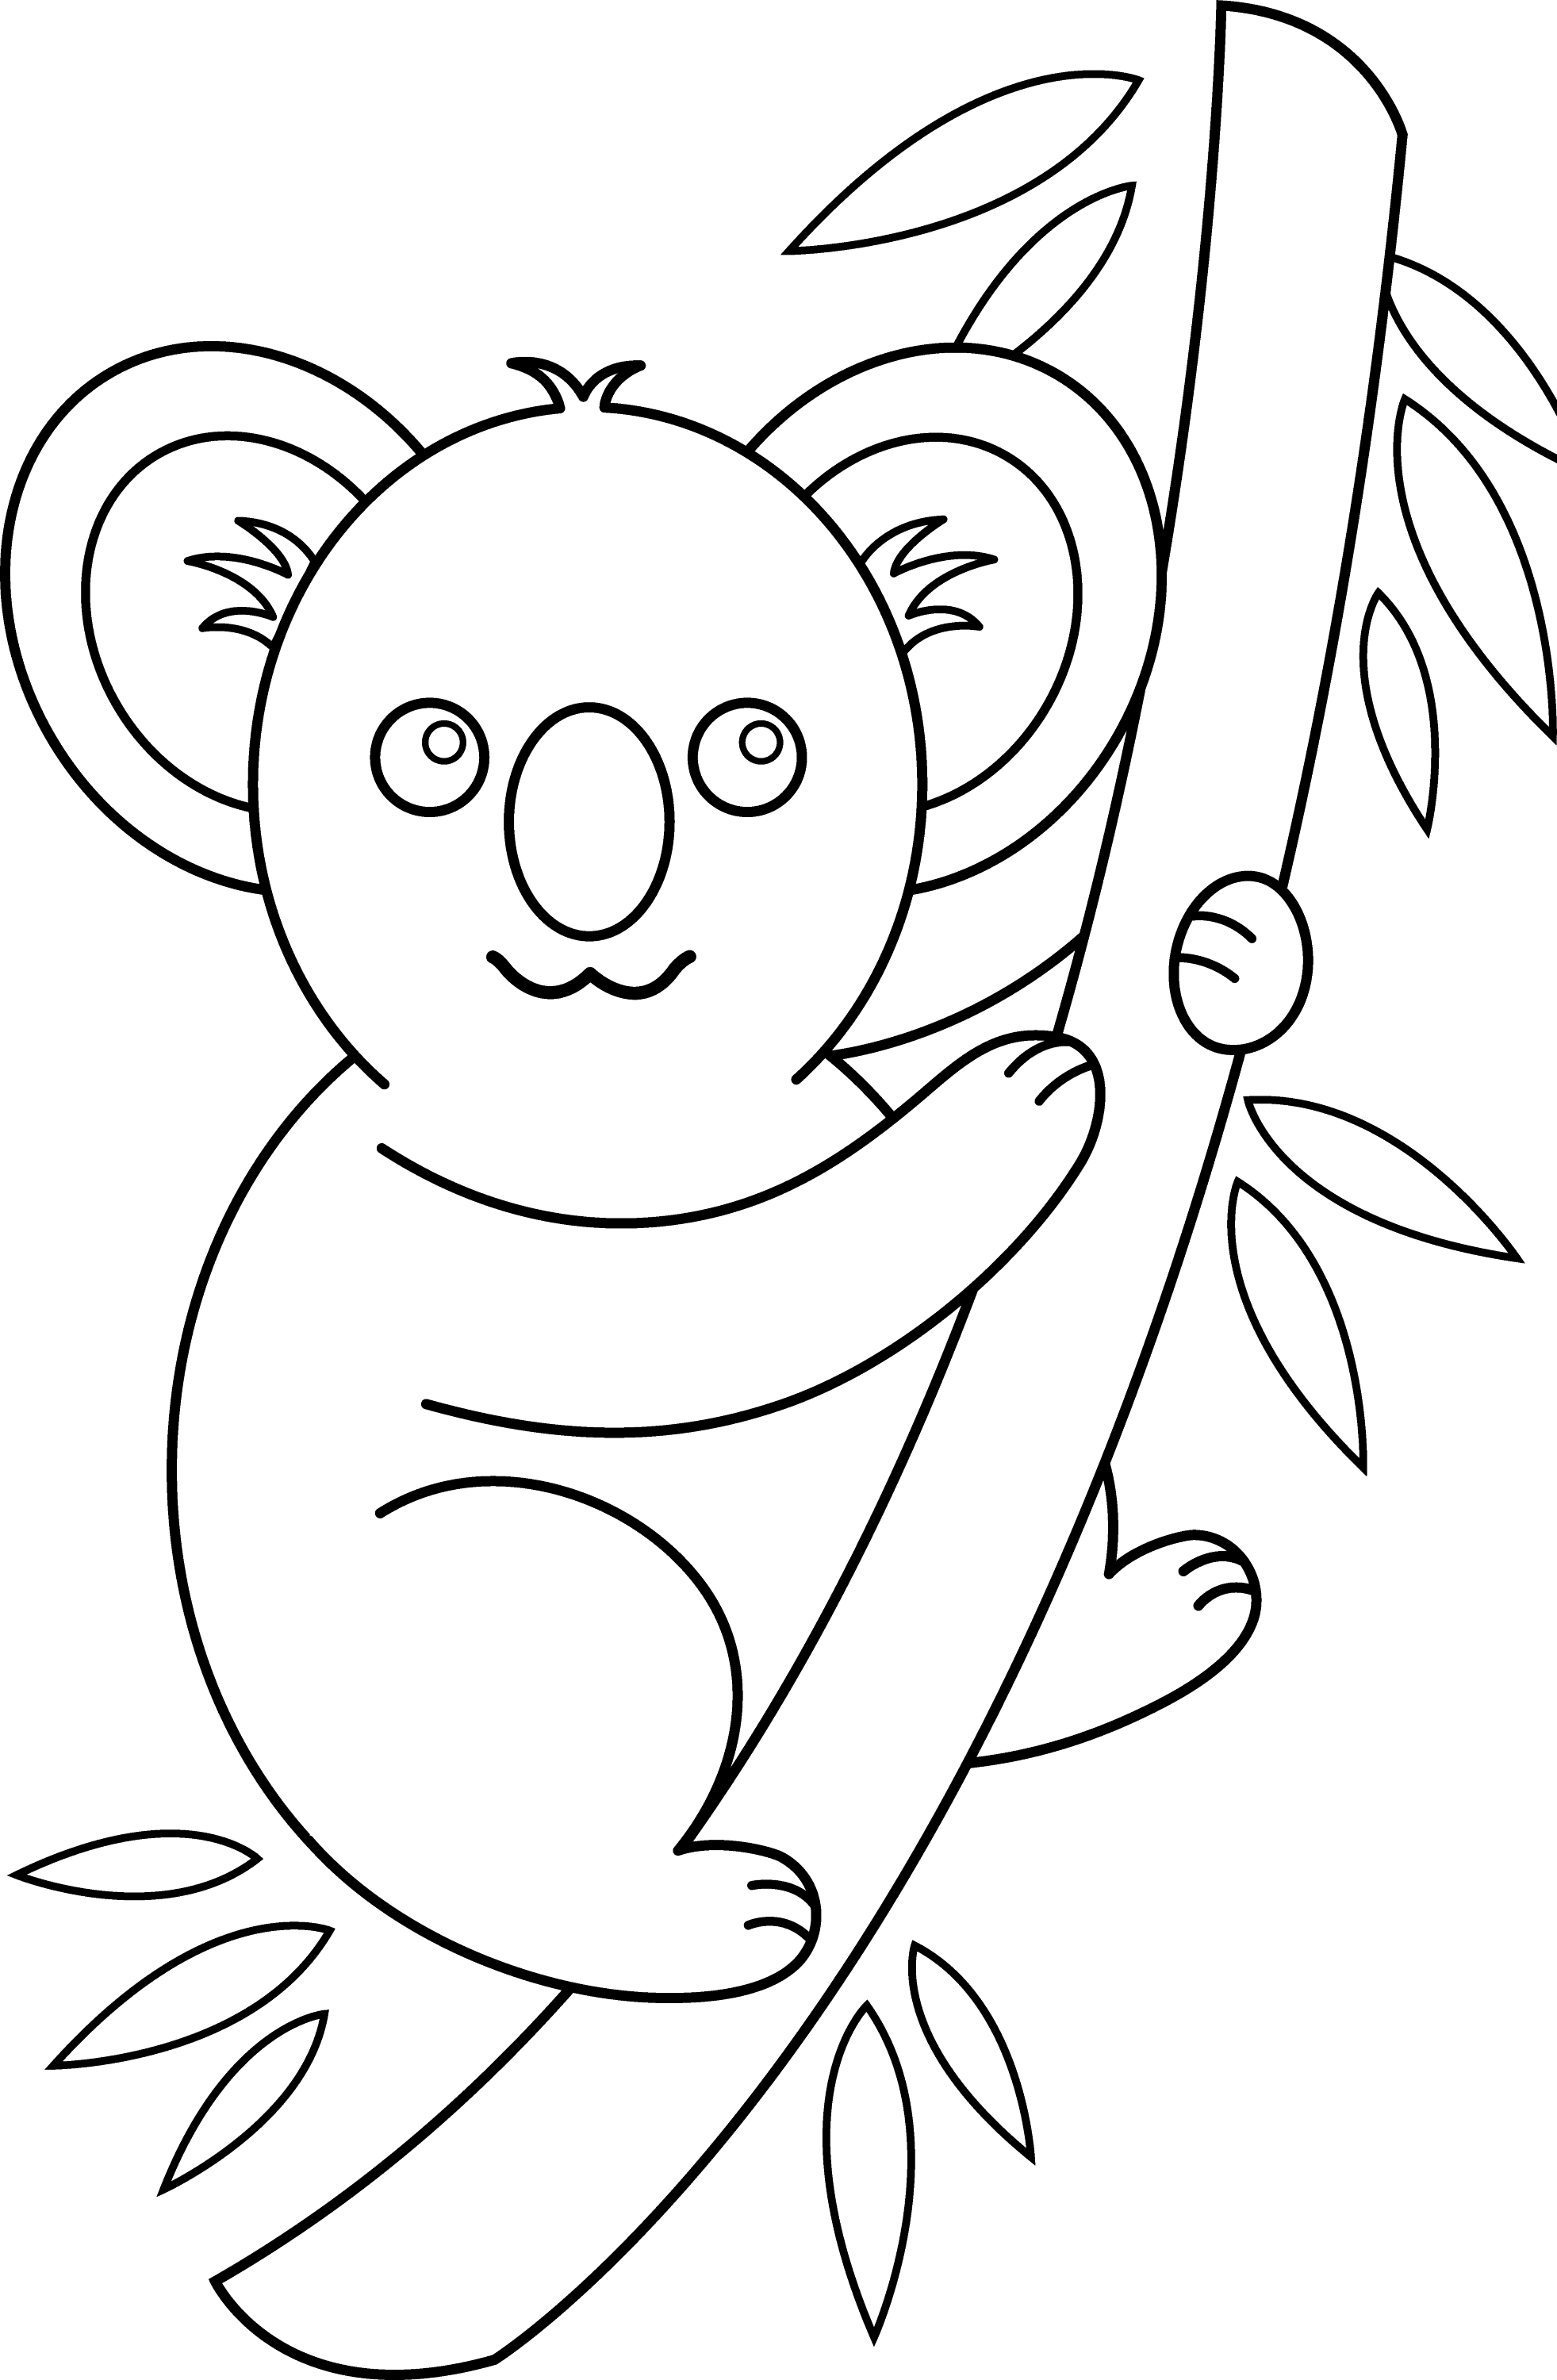 Koala Coloring Page - Free Clip Art